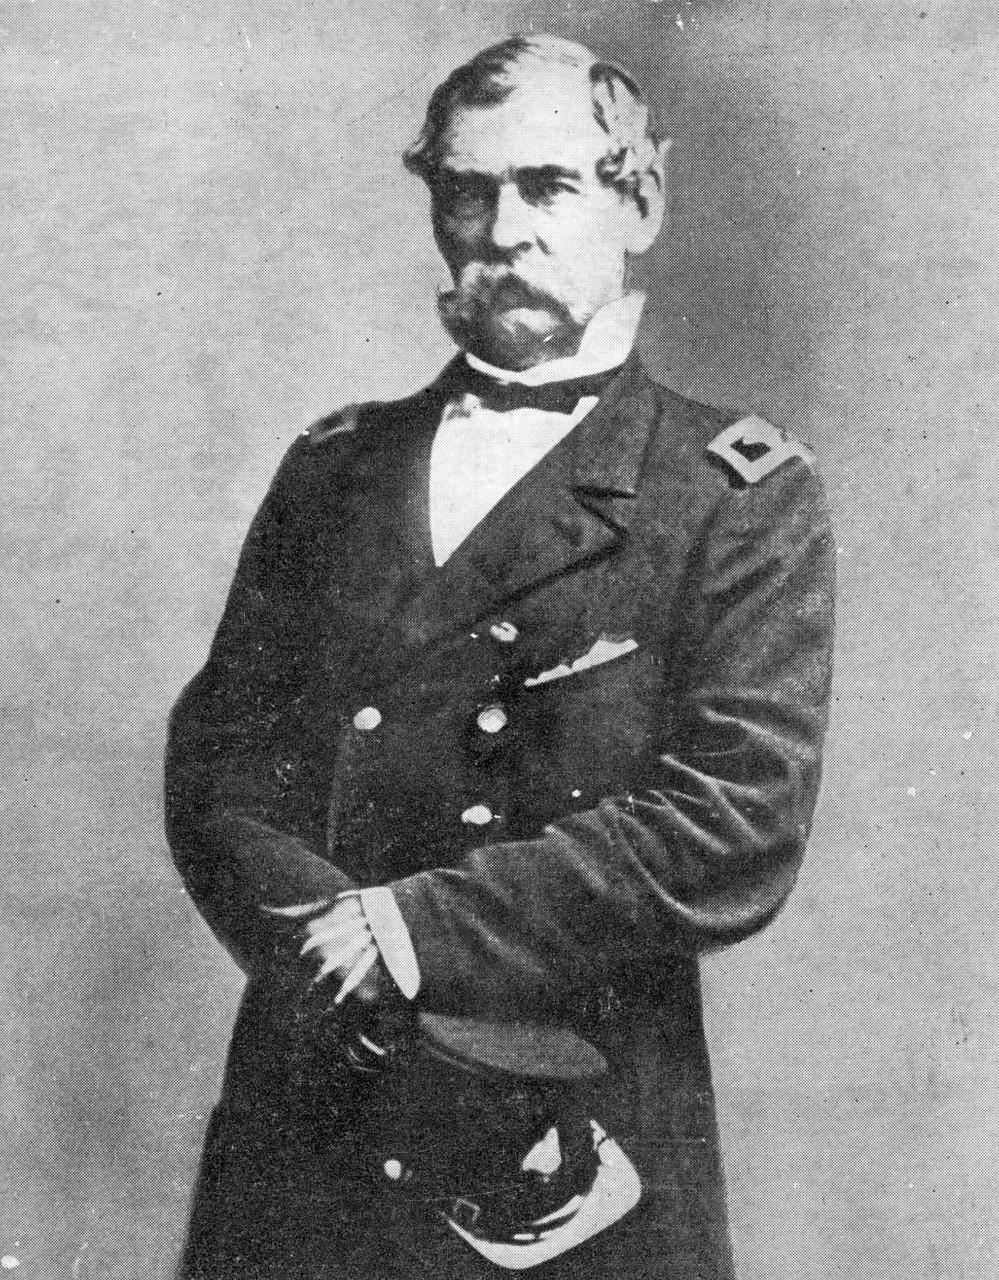 Major General Charles F. Smith, USA